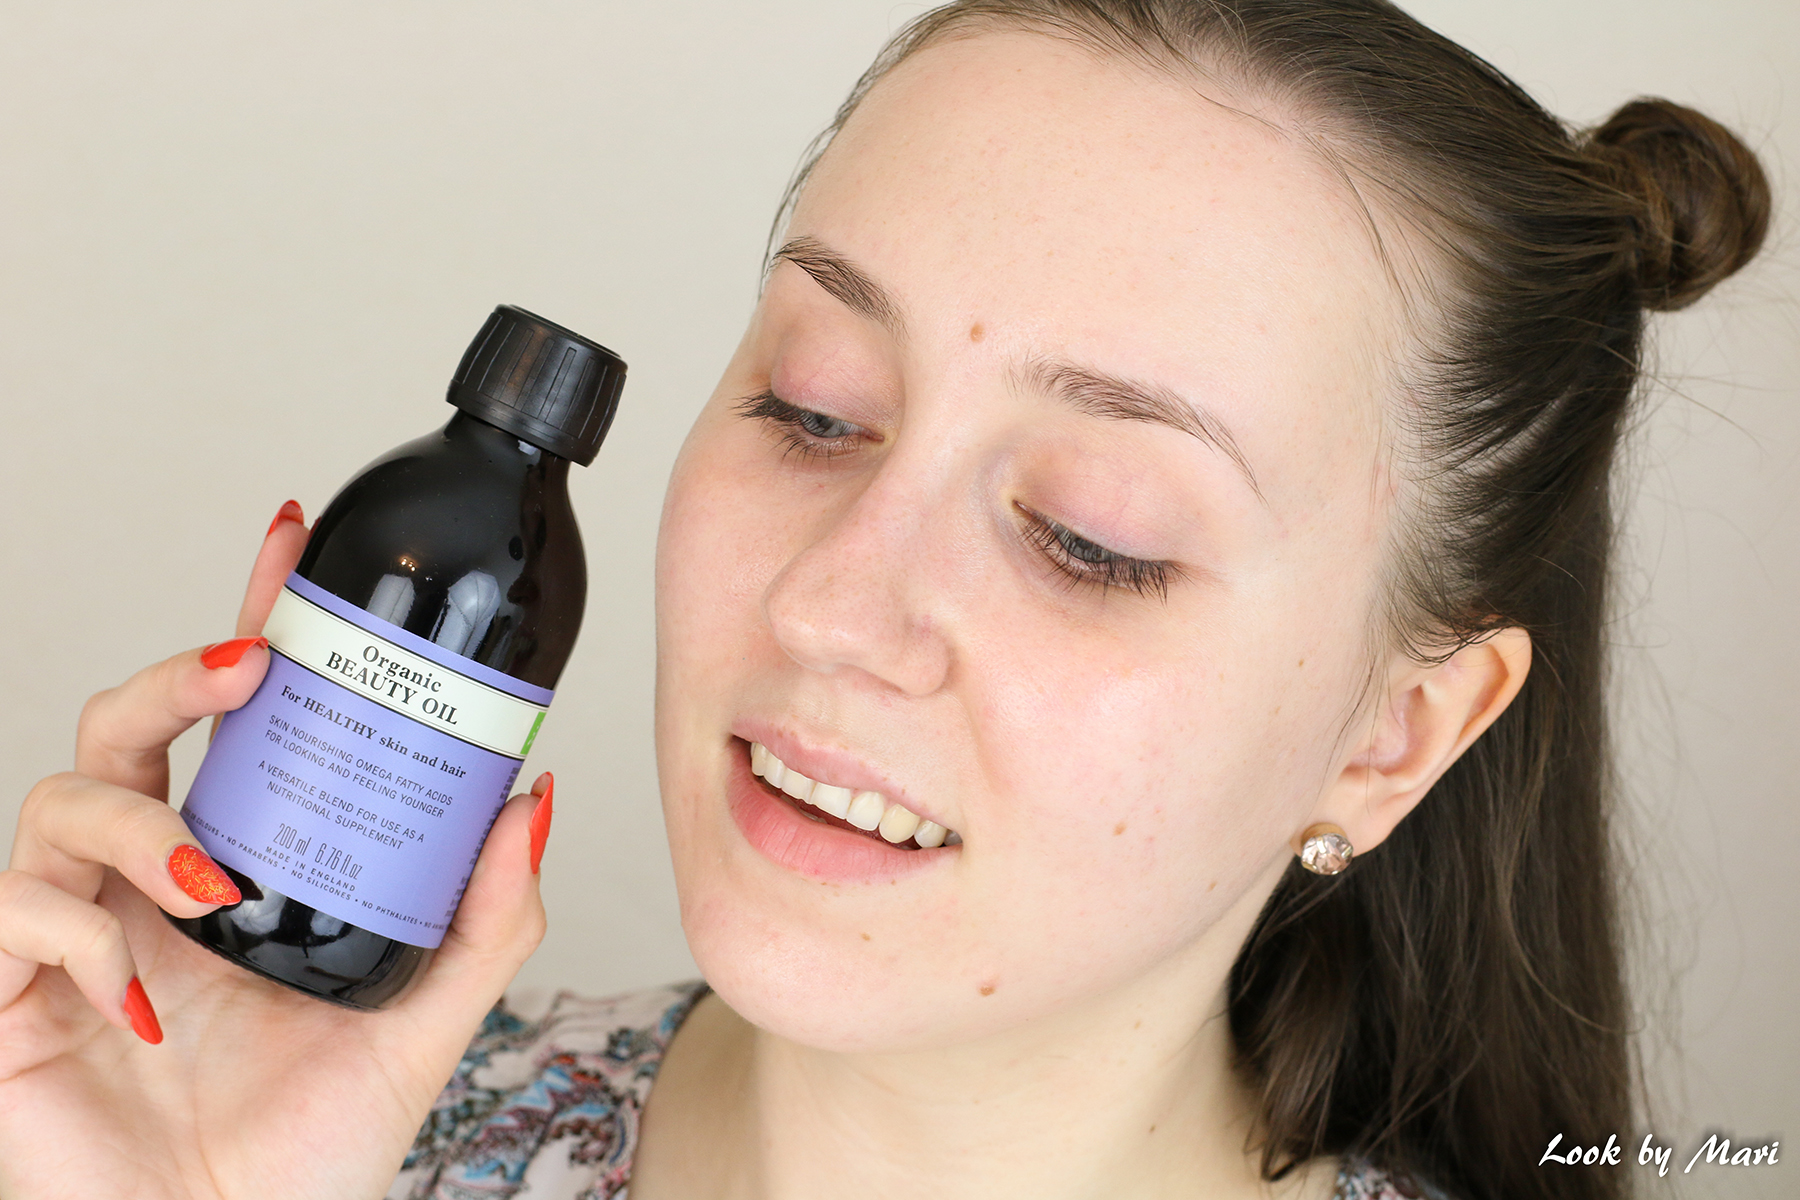 16 neal's yard remedies organic beauty oil review kokemuksia does it work blog blogi